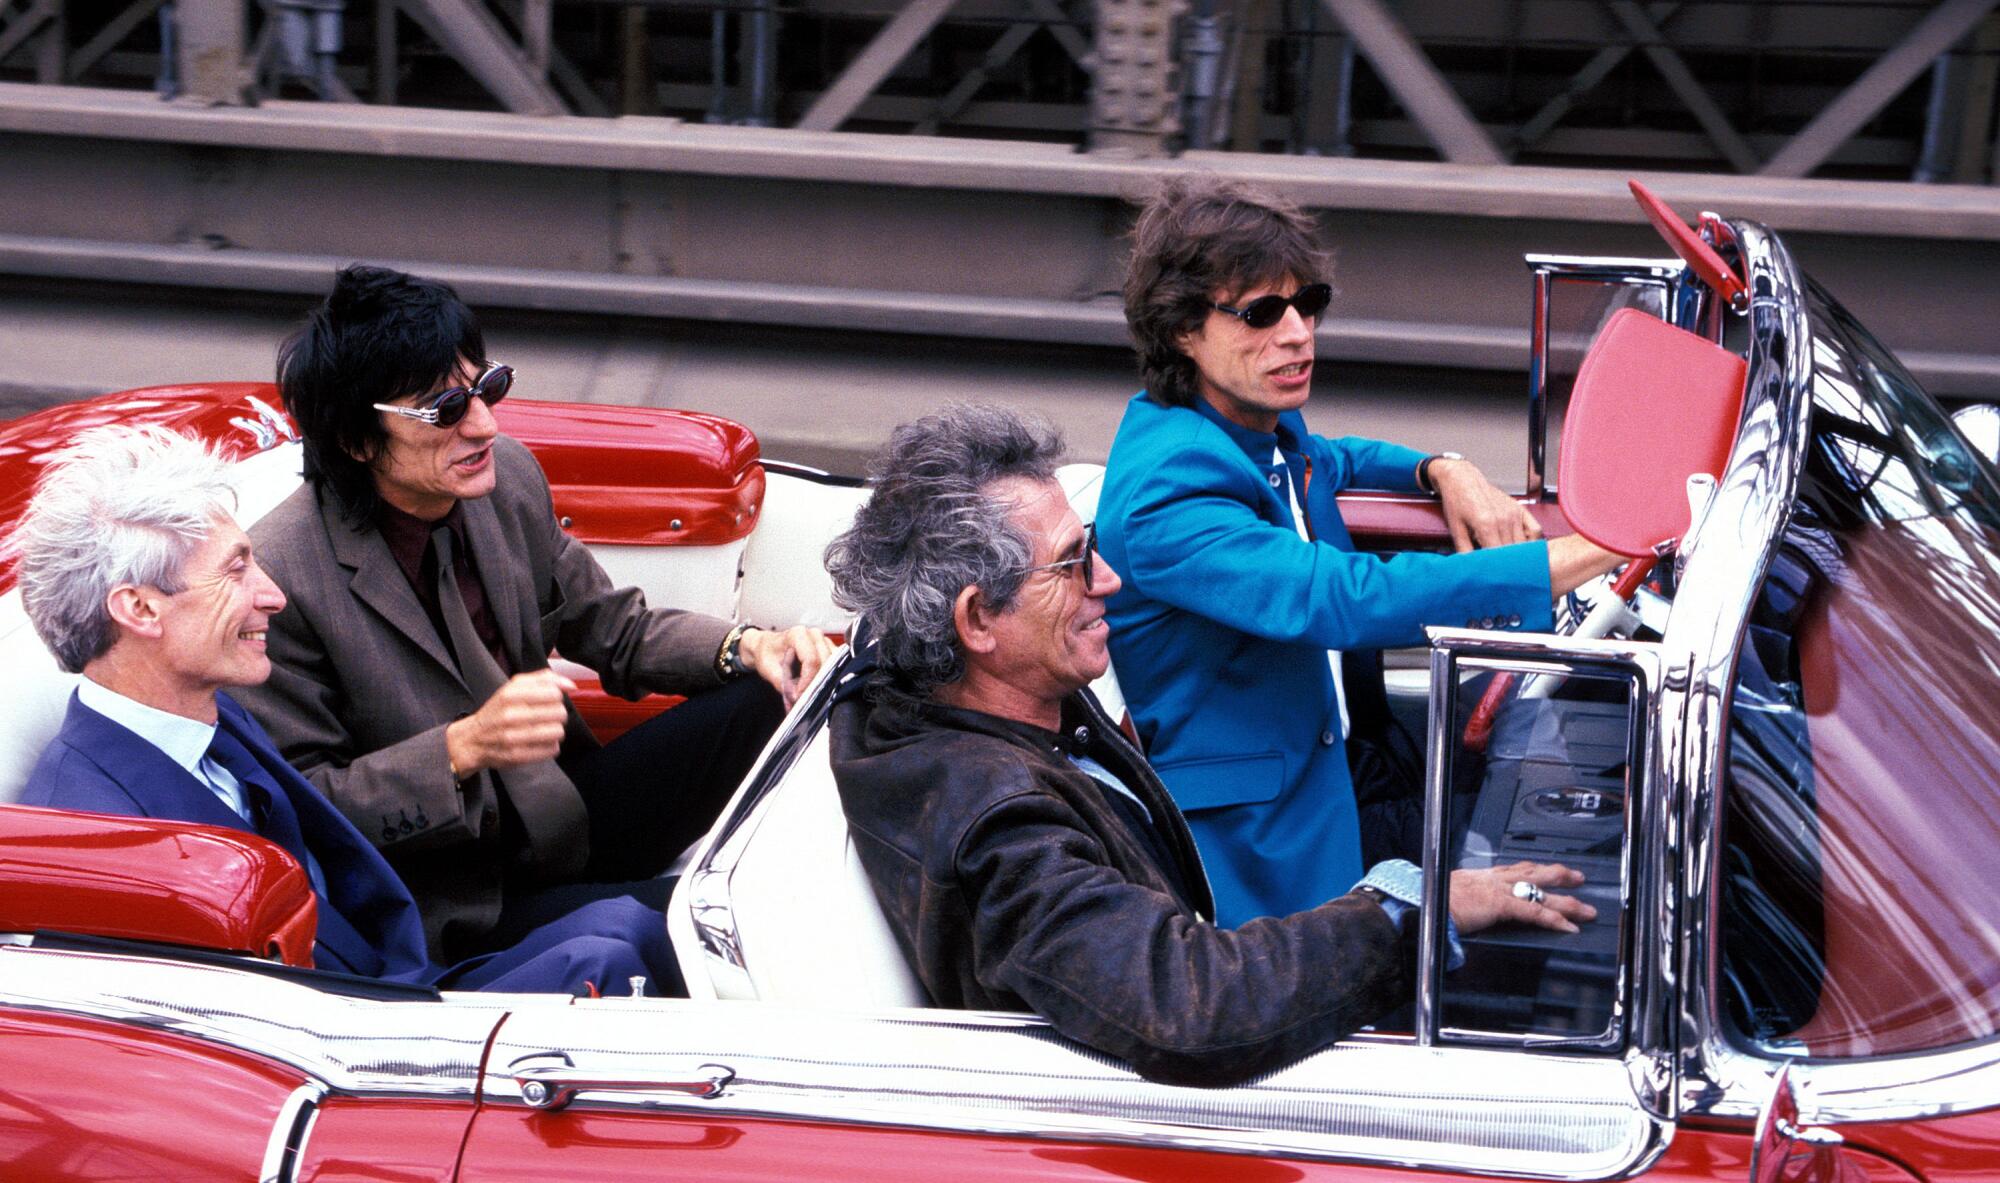 Mick Jagger drives Charlie Watts, Ron Wood and Keith Richards in a convertible car.